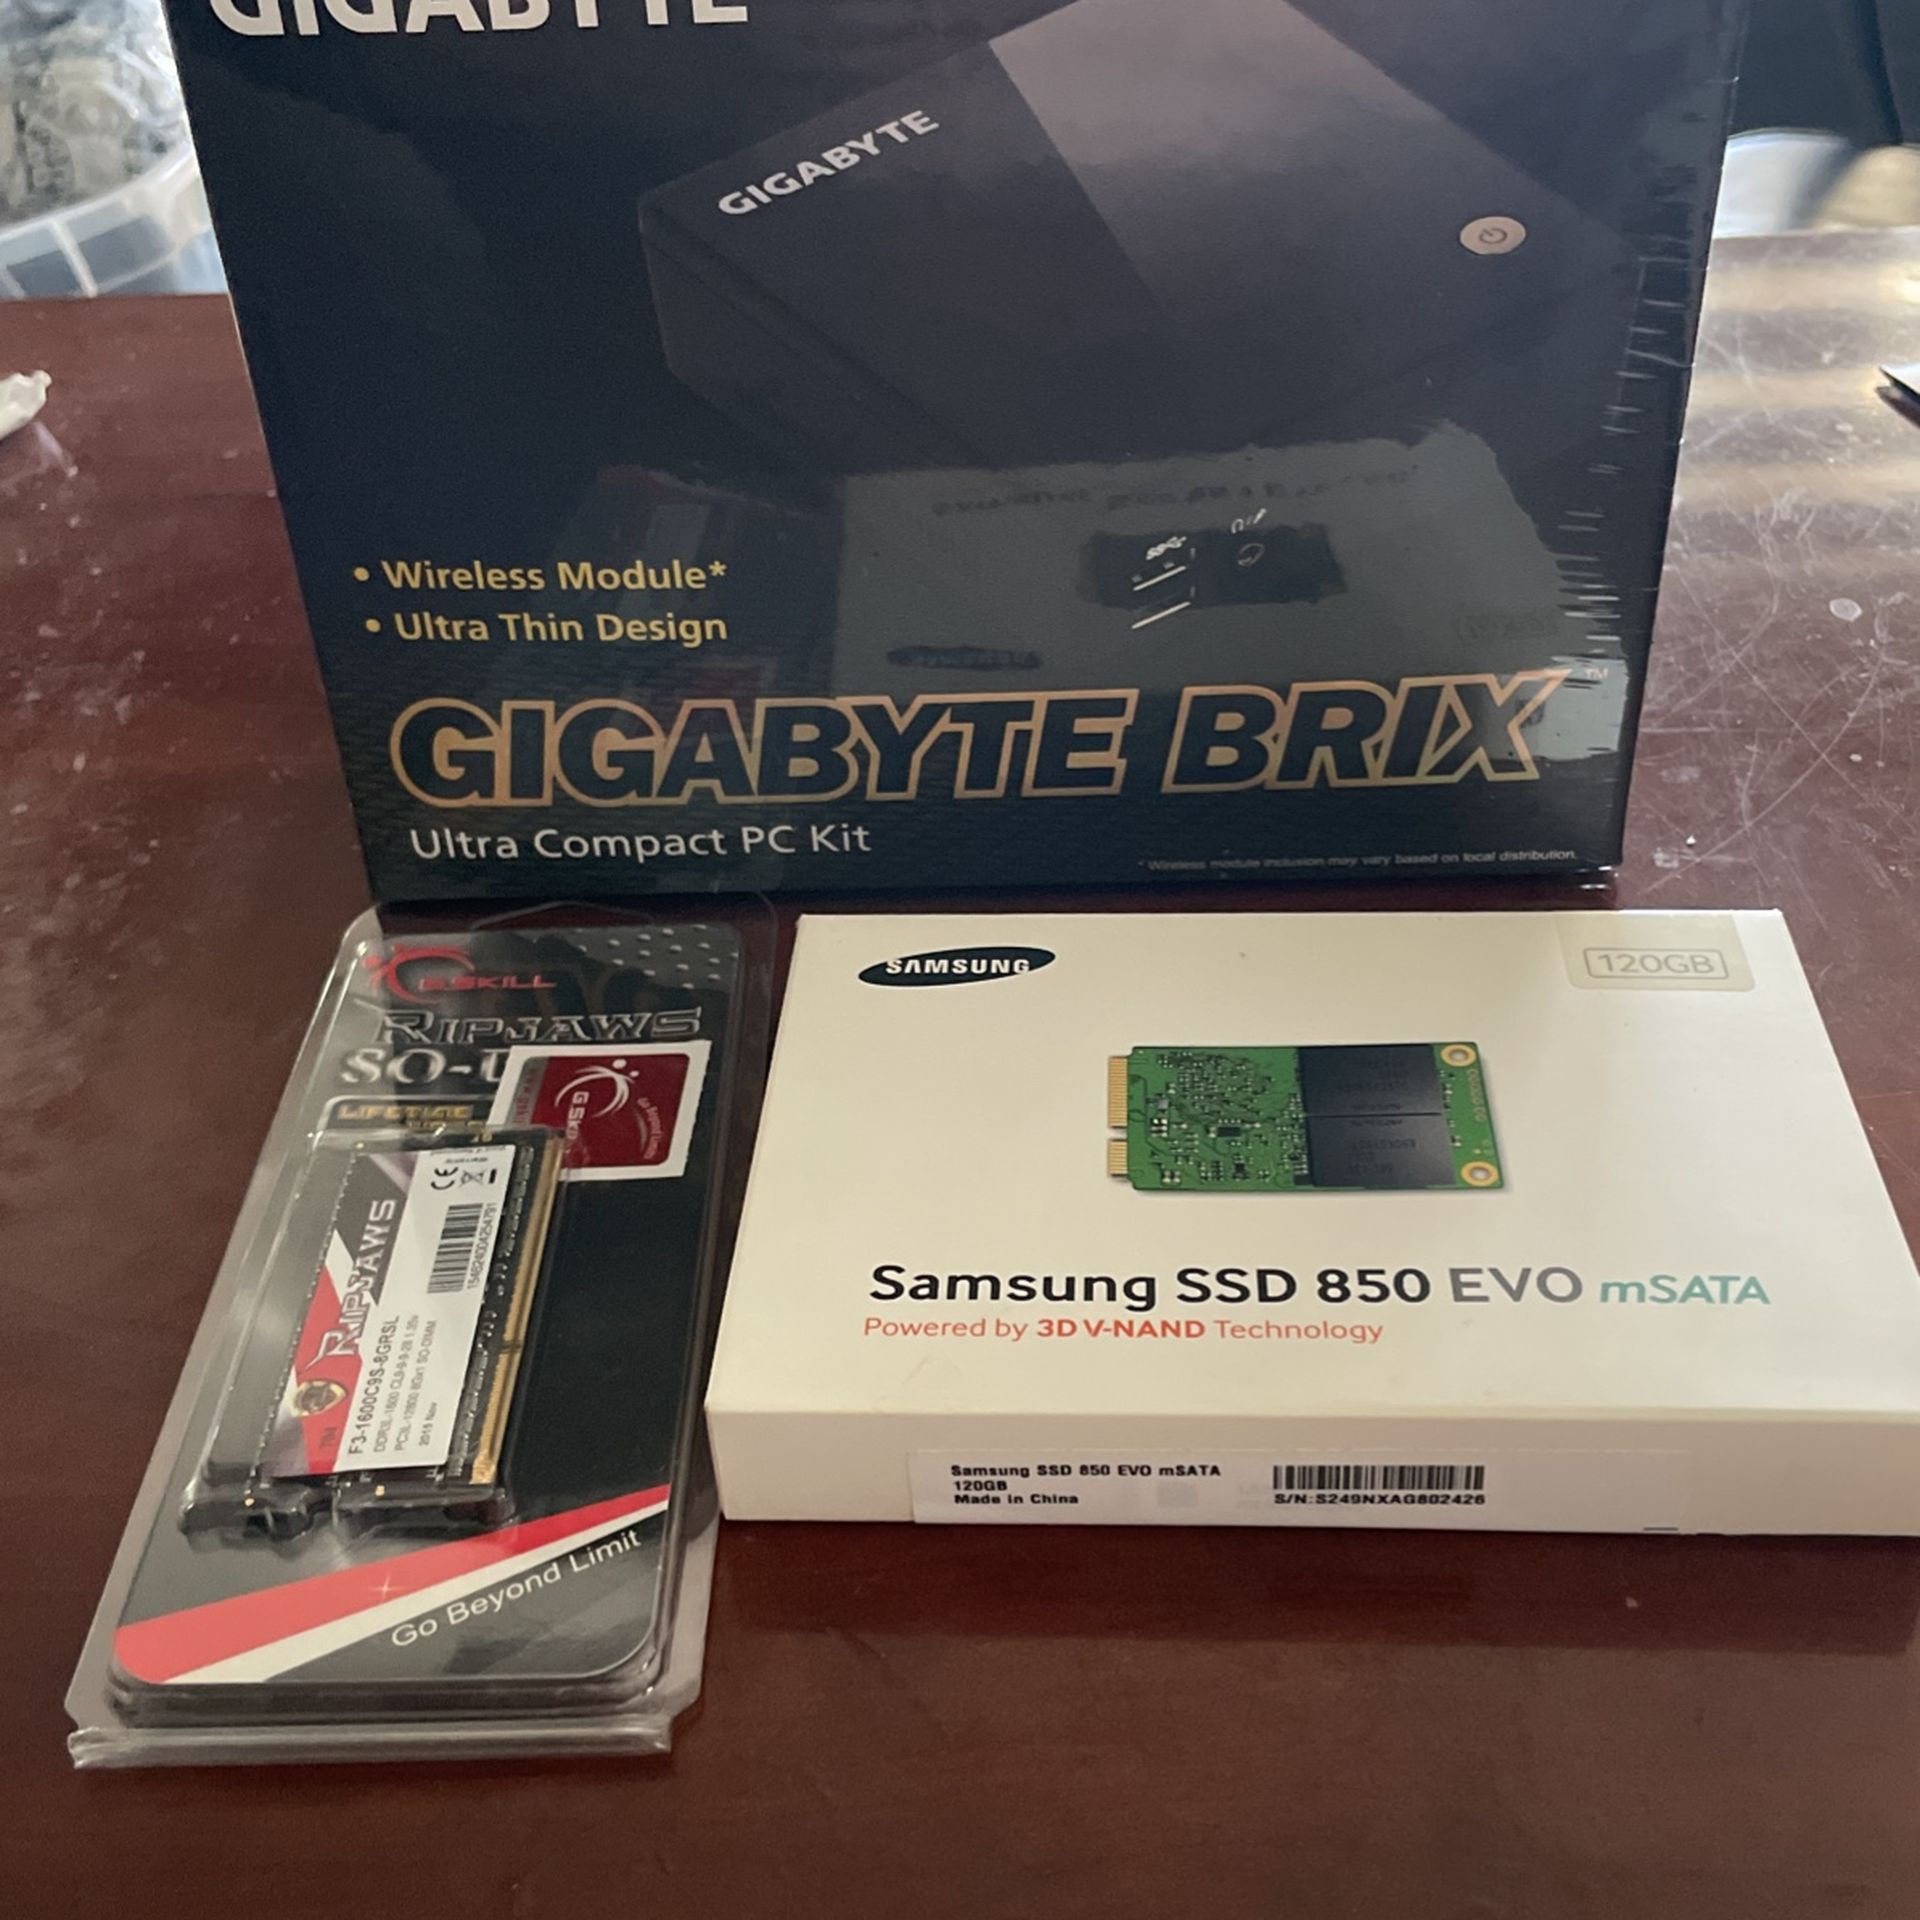 Gigabyte Brix Ultra Compact PC Kit